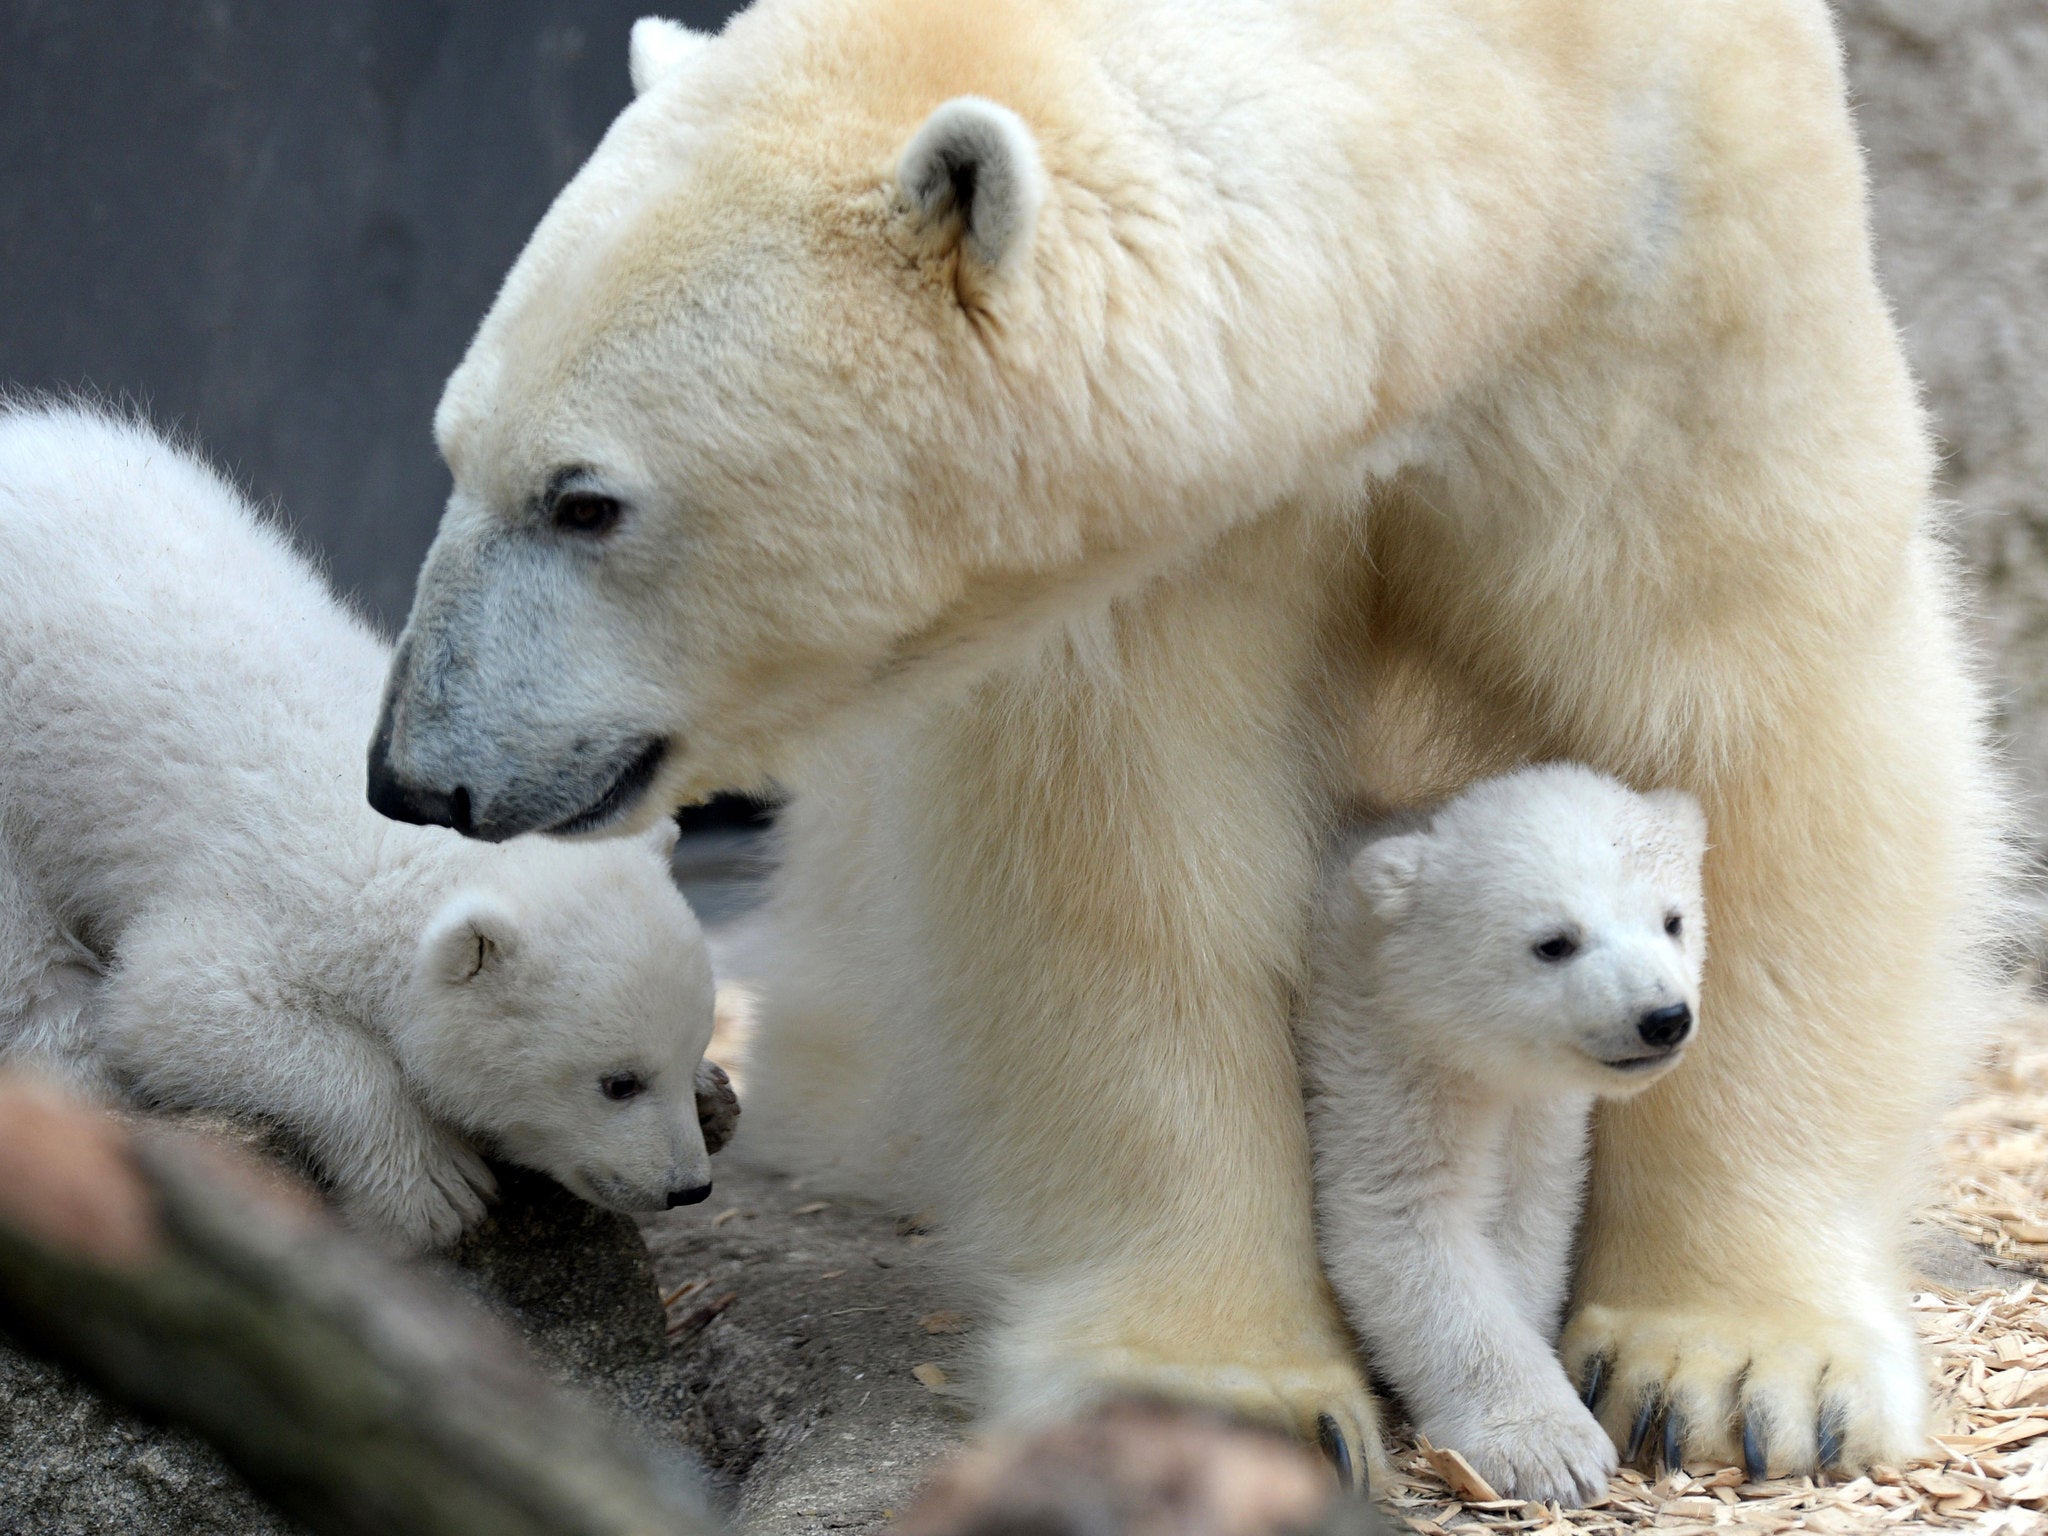 The polar bear's natural habitati, arctic sea ice, is rapidly melting